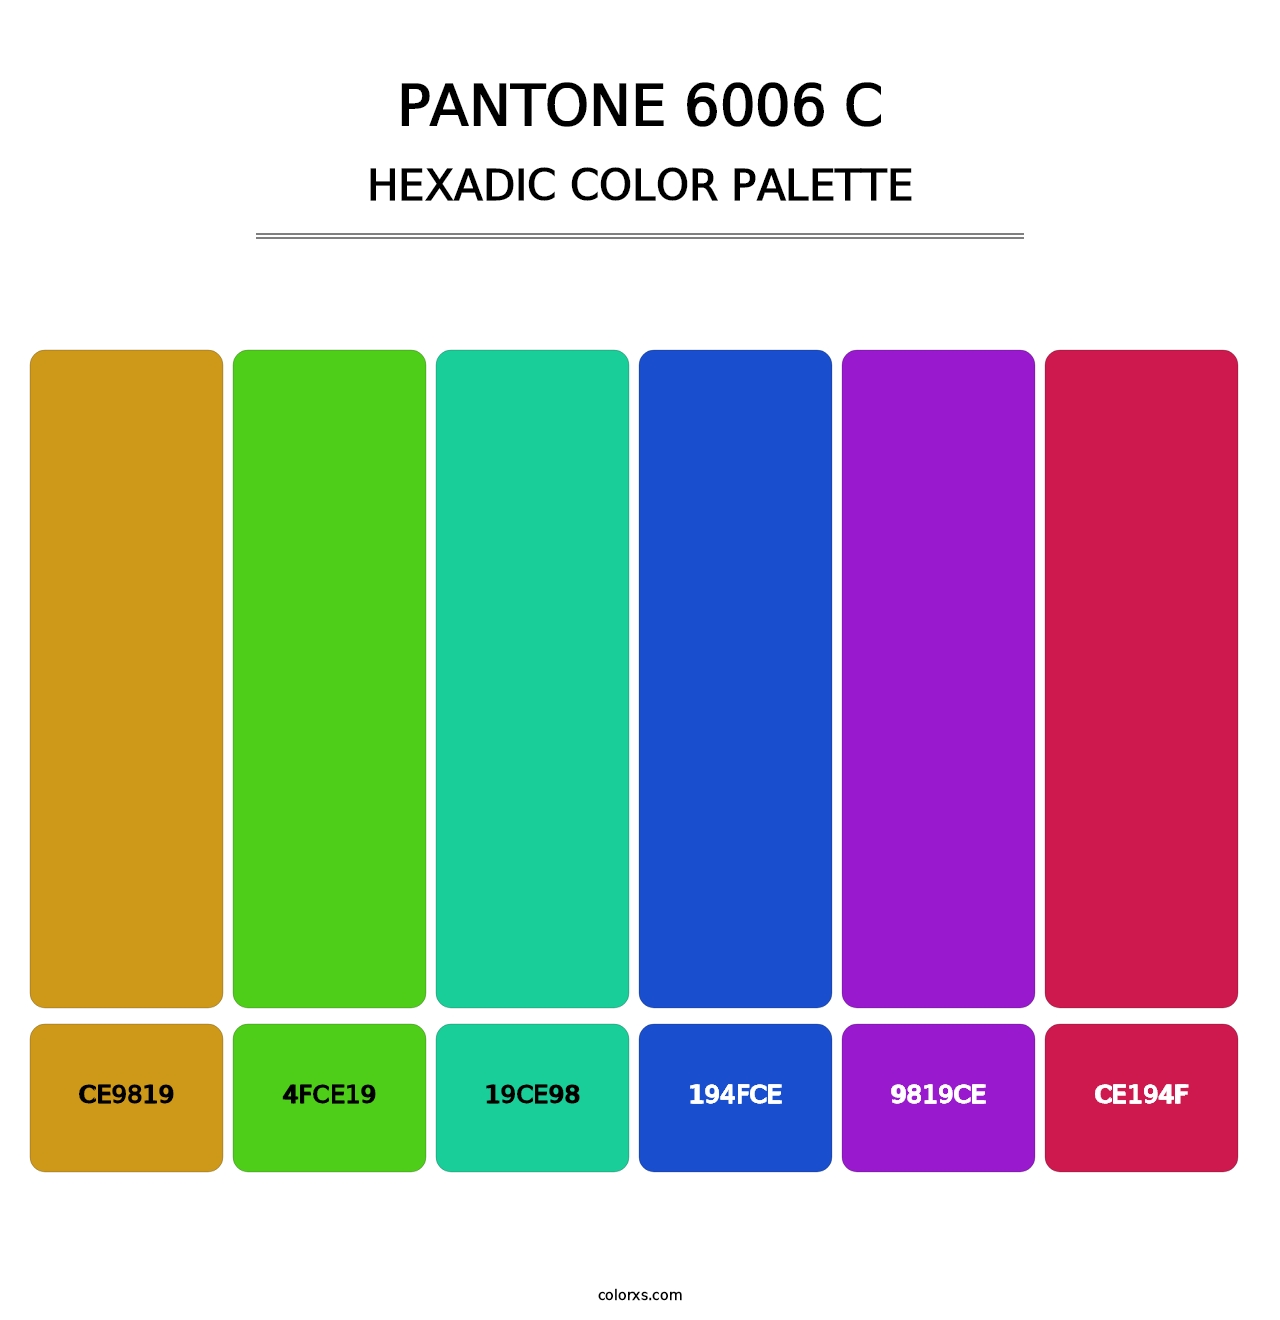 PANTONE 6006 C - Hexadic Color Palette